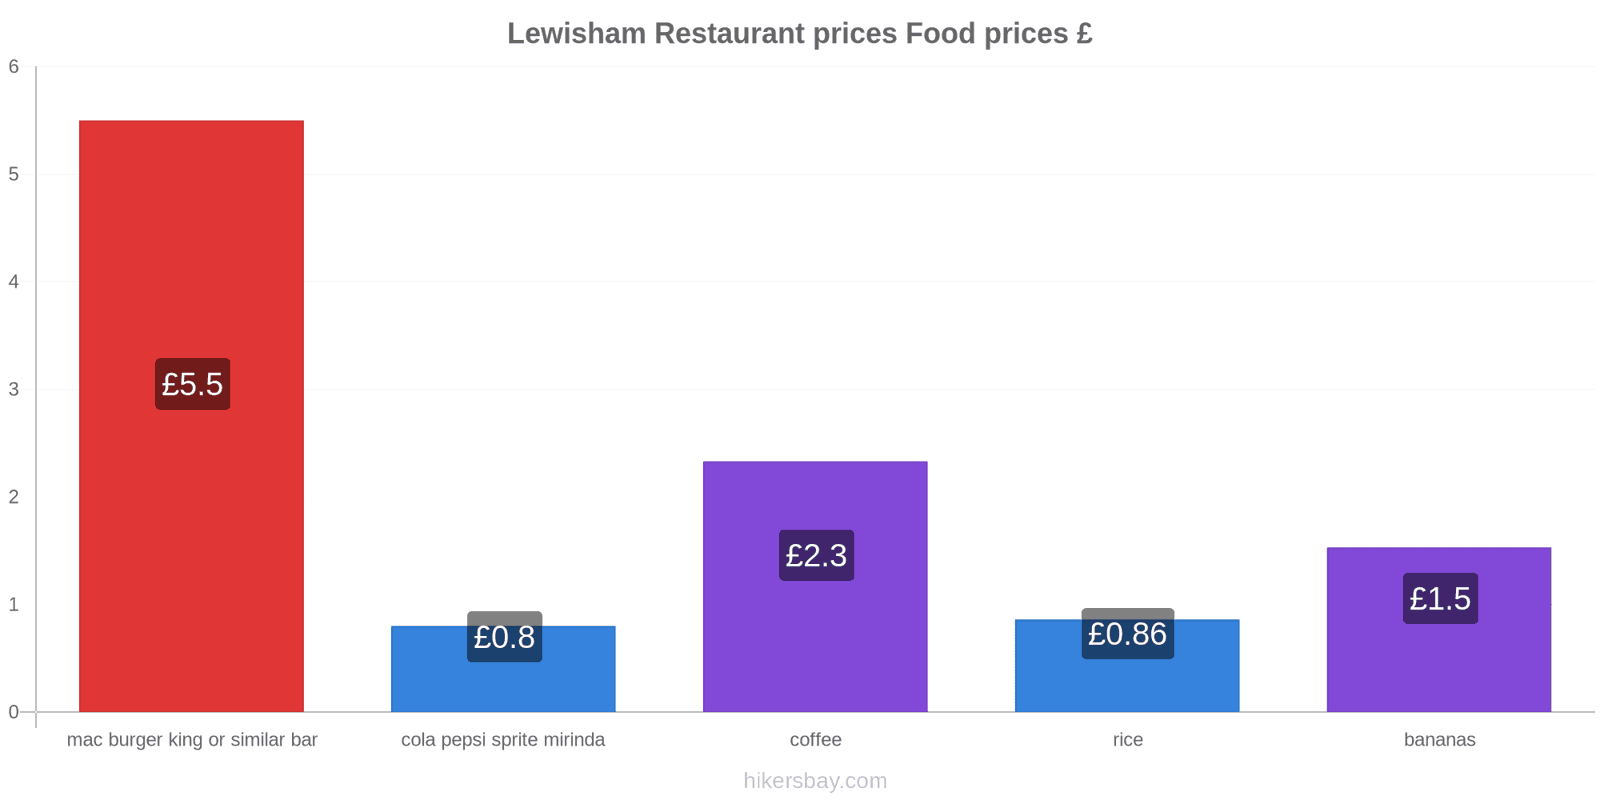 Lewisham price changes hikersbay.com